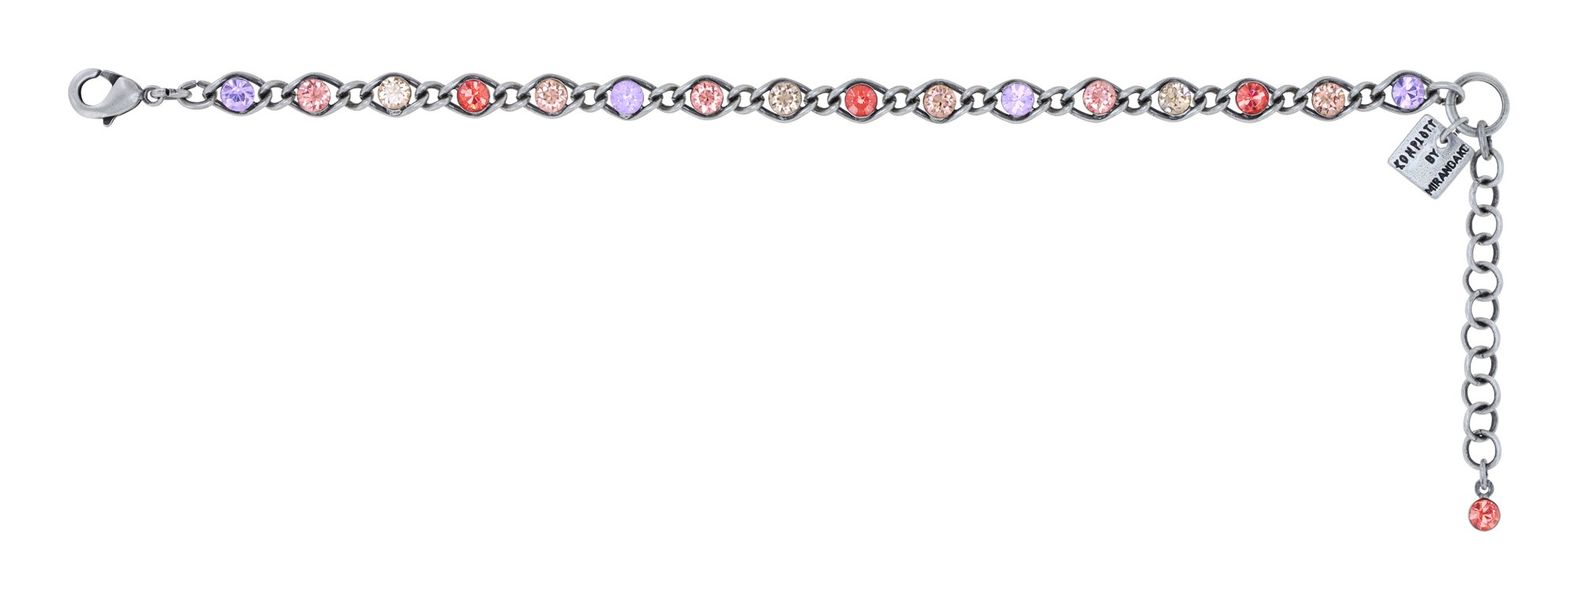 Konplott Armband - Magic Fireball - violet/pink/beige (0040)